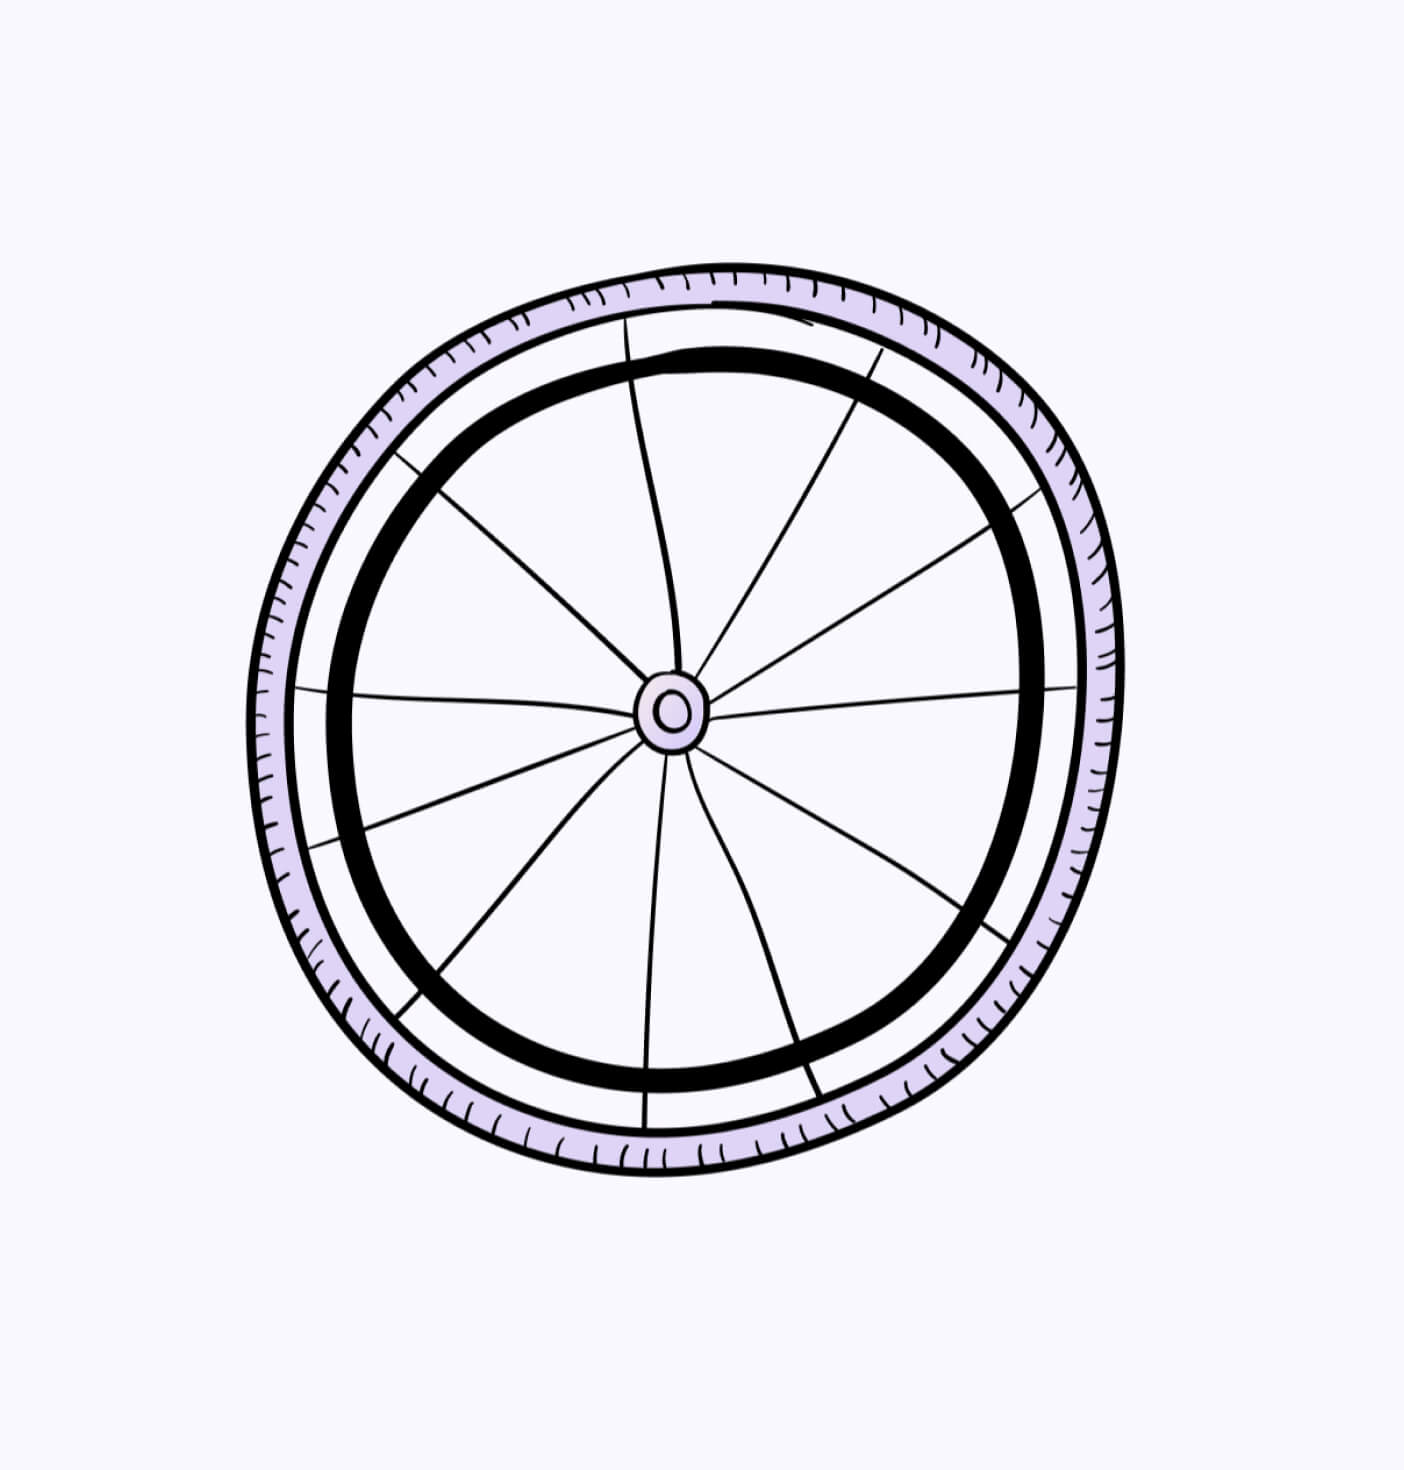 Illustration of a bike wheel